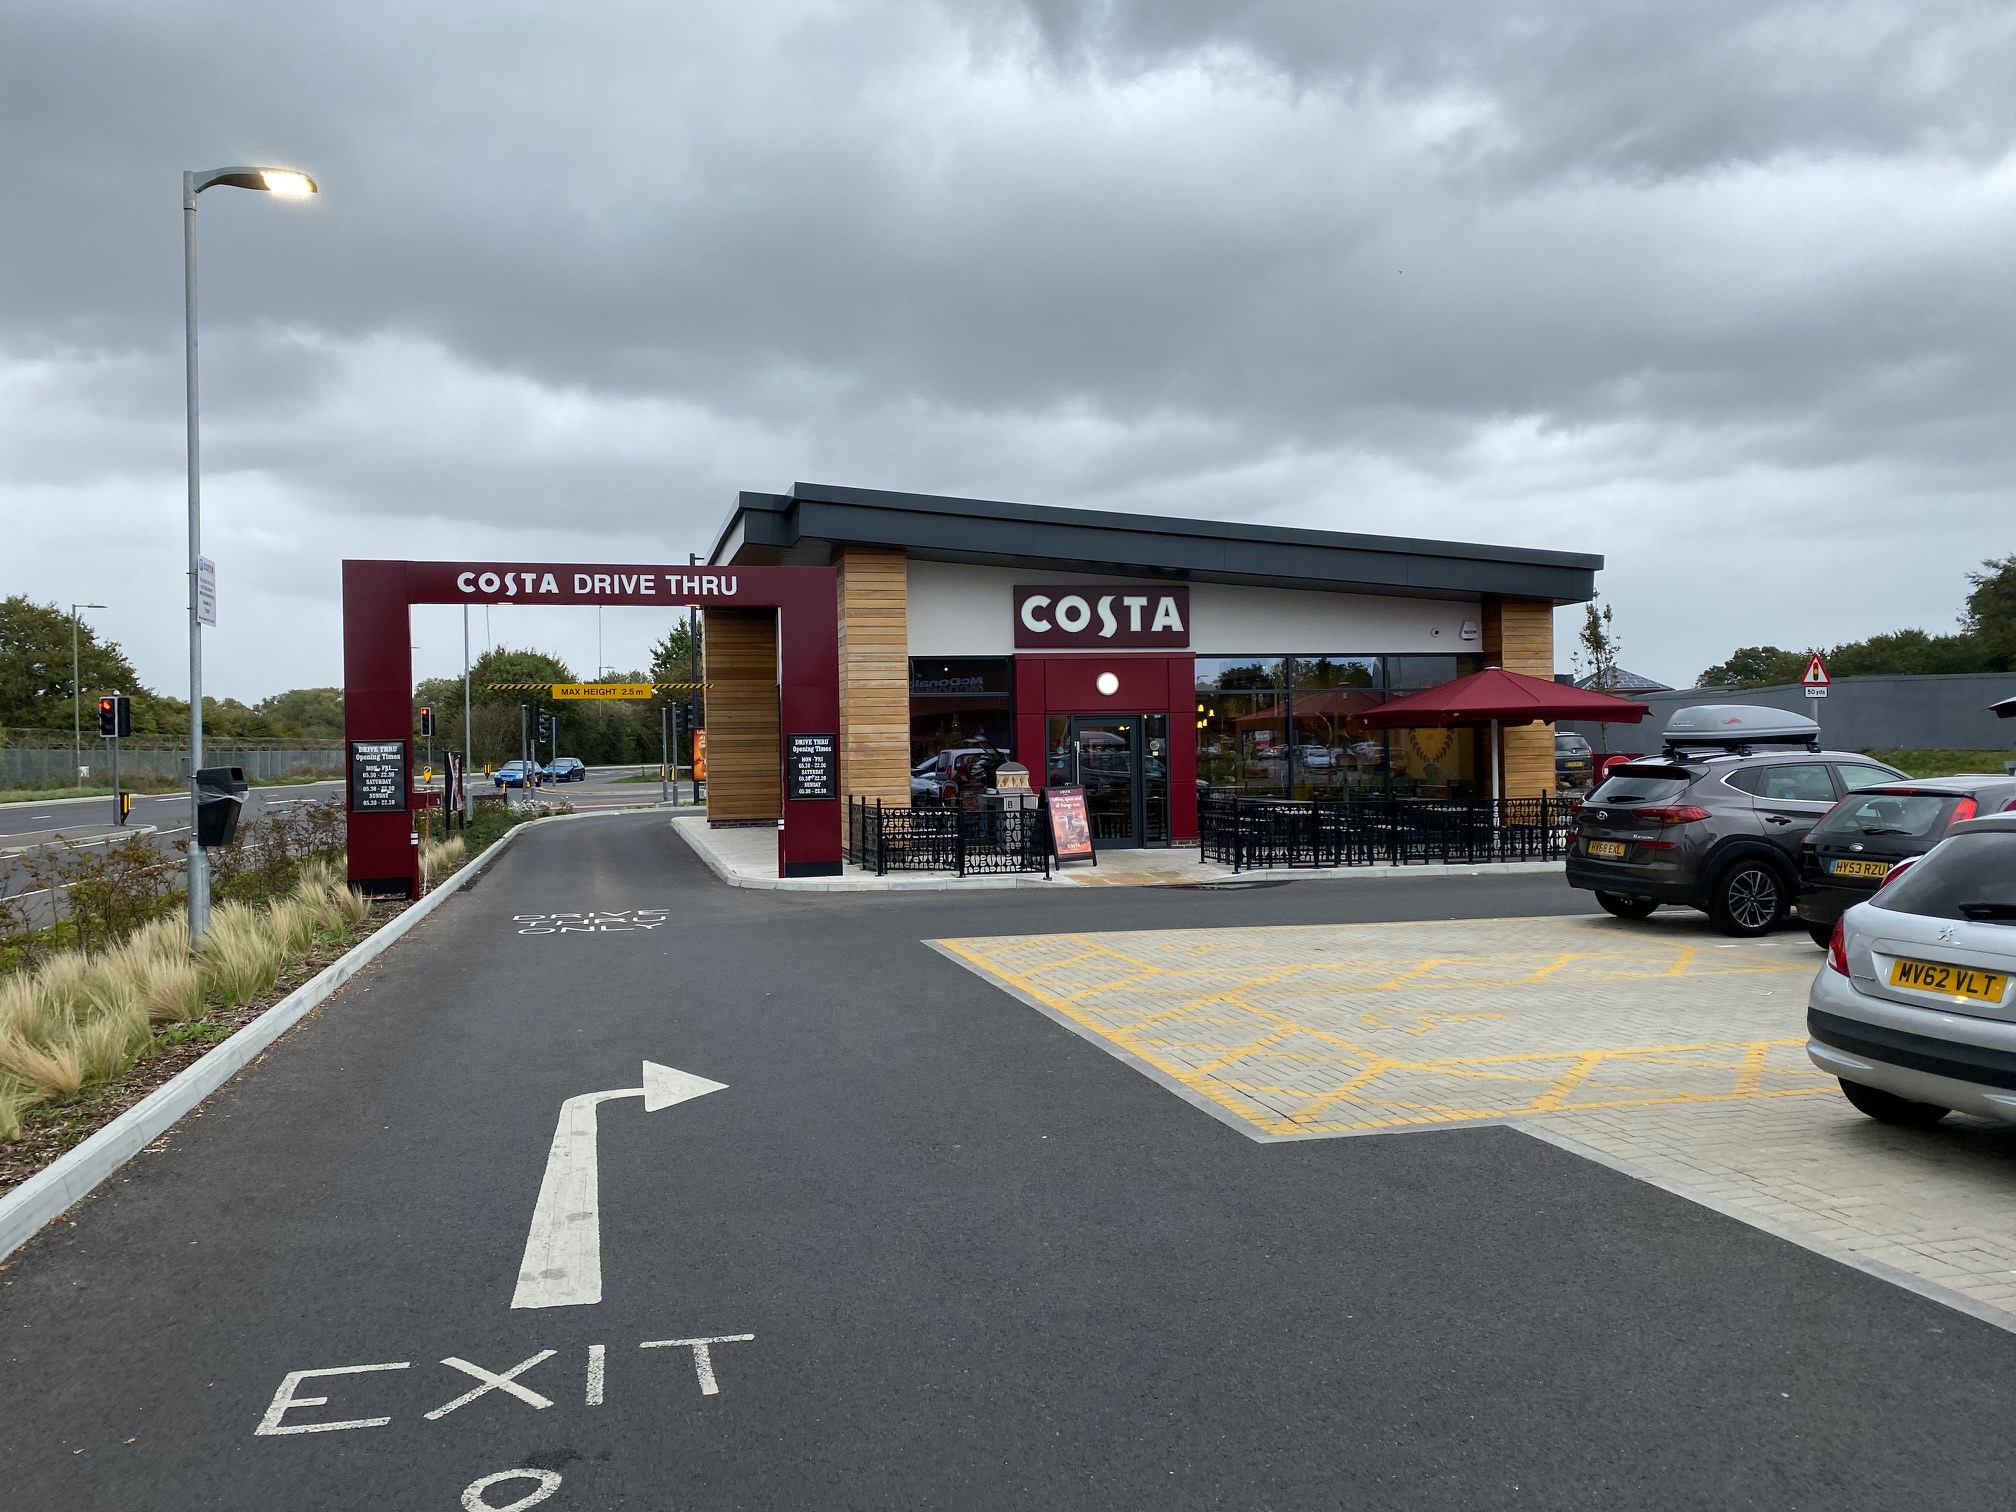 Costa at Brockhurst Gate